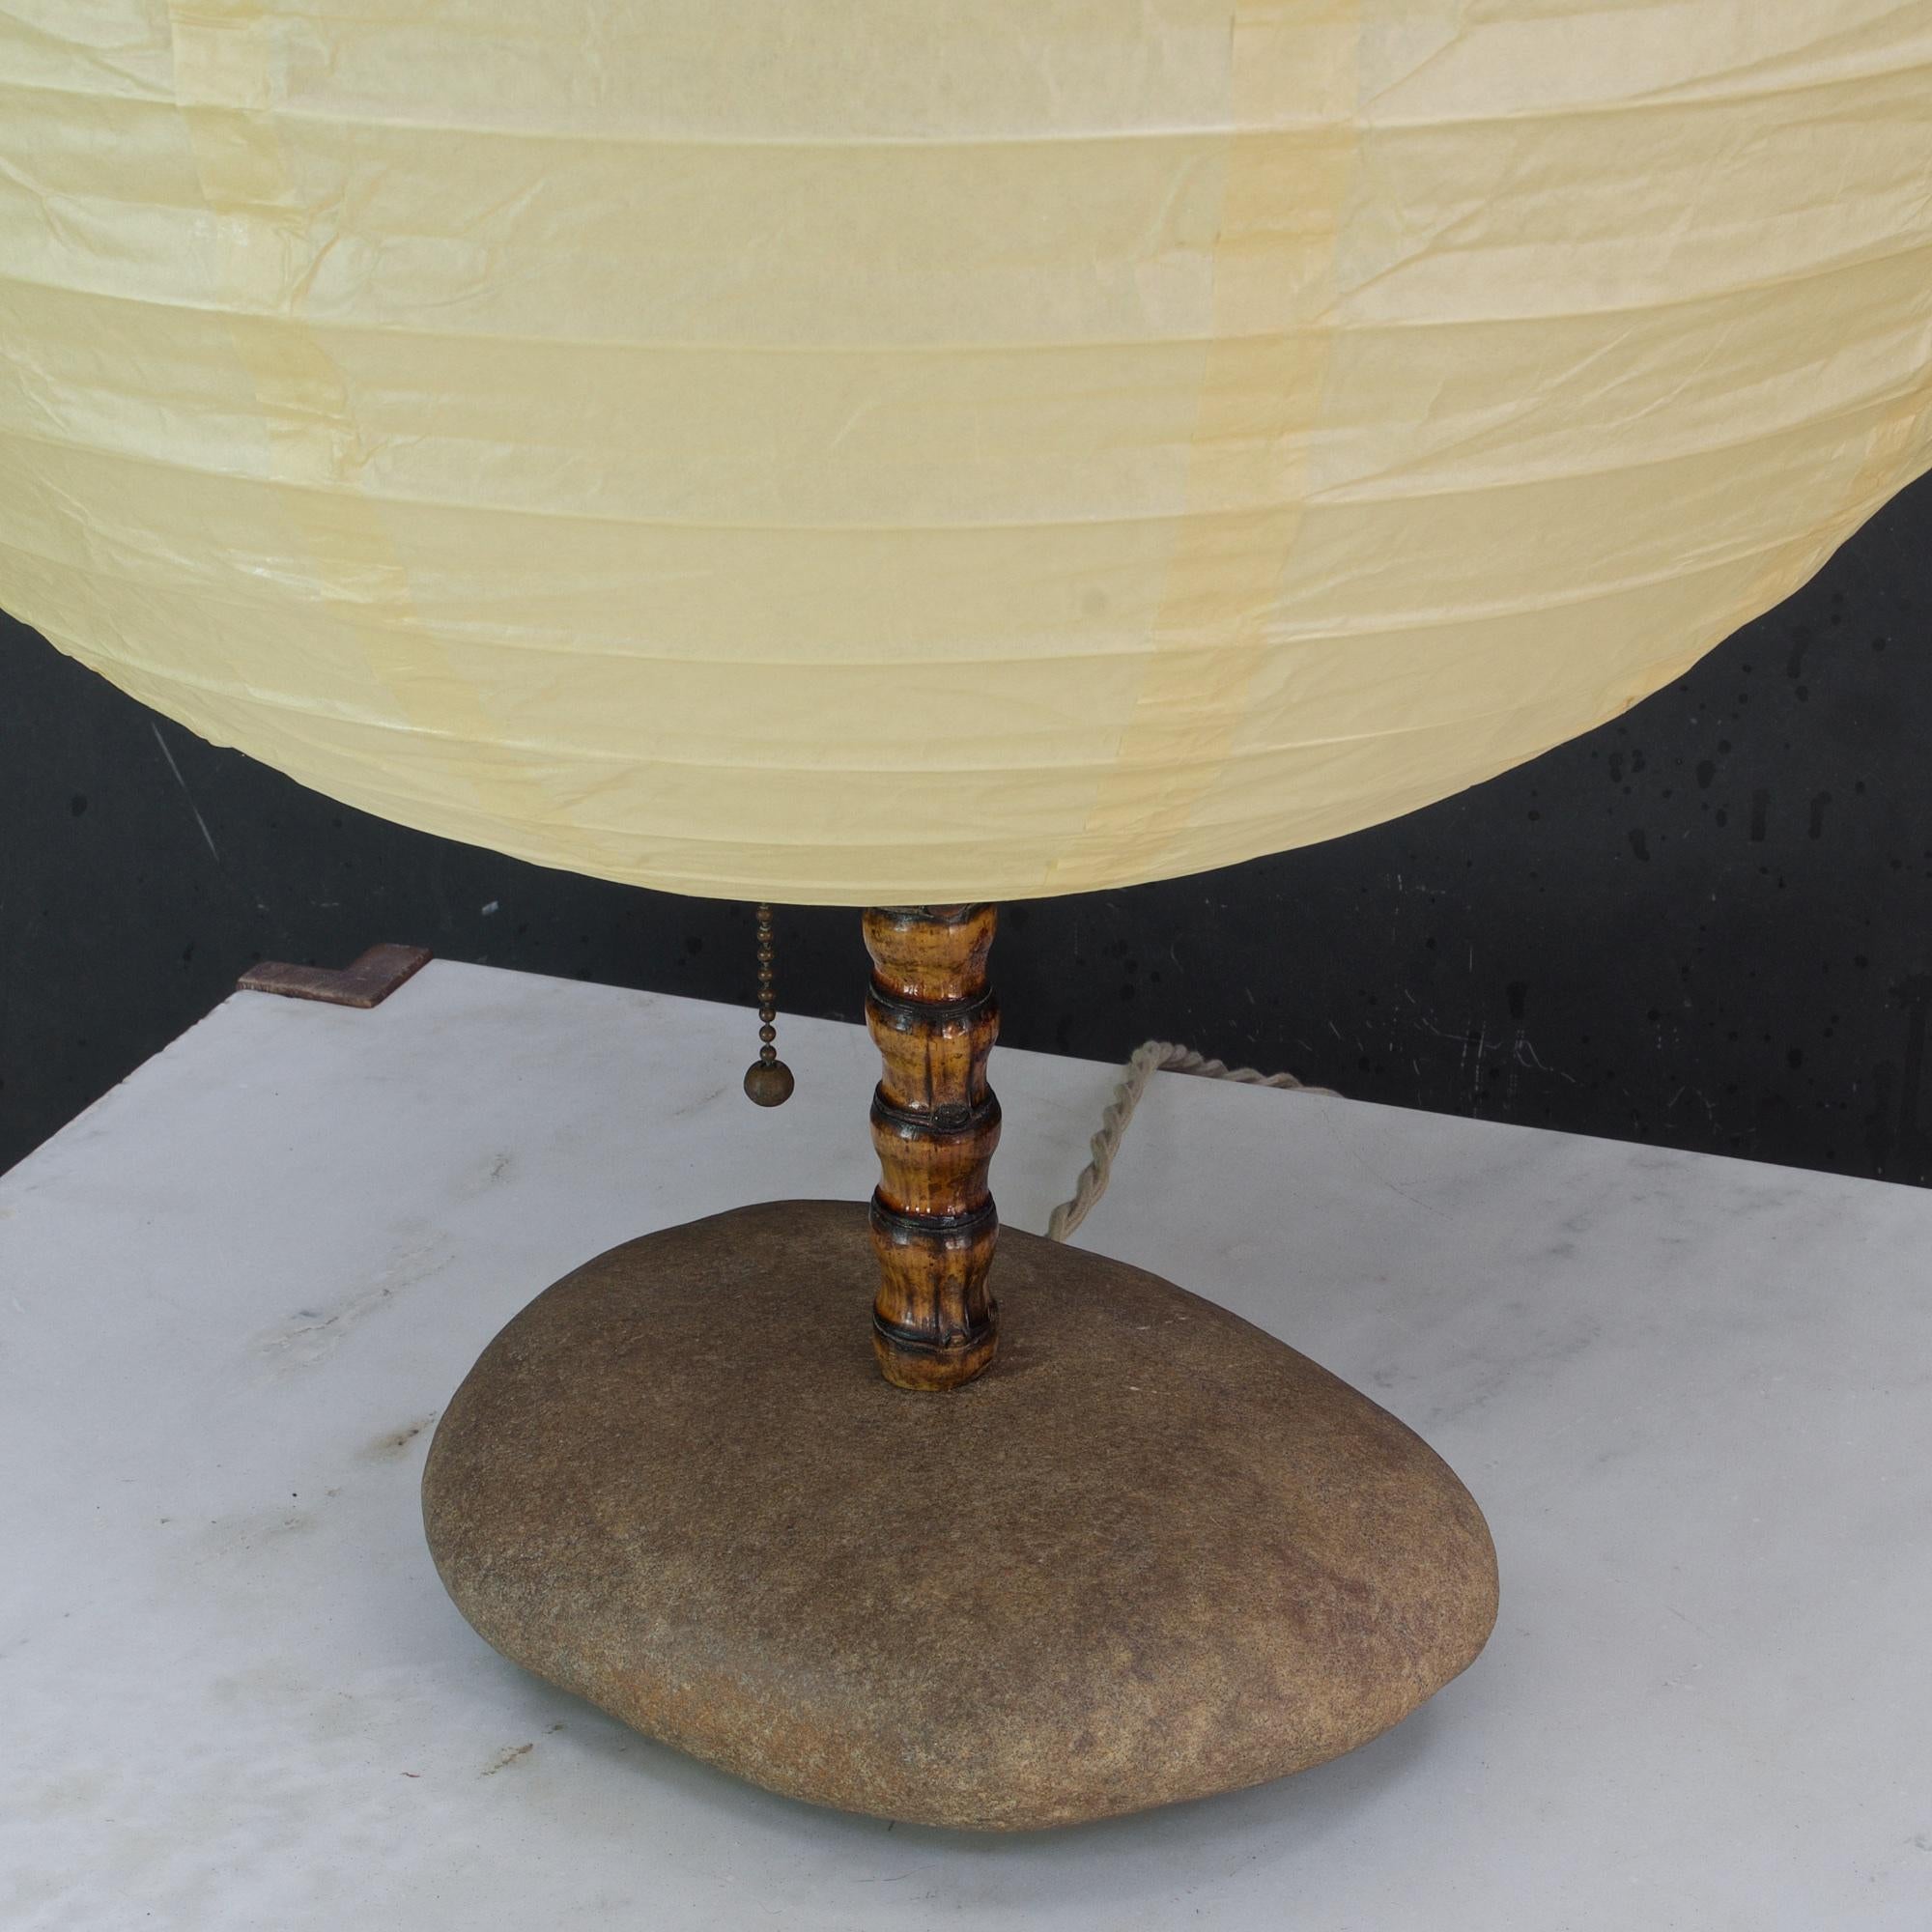 Neoprimitive River Stone Table Lamp Inspired by Isamu Noguchi Akari Lights (amerikanisch)